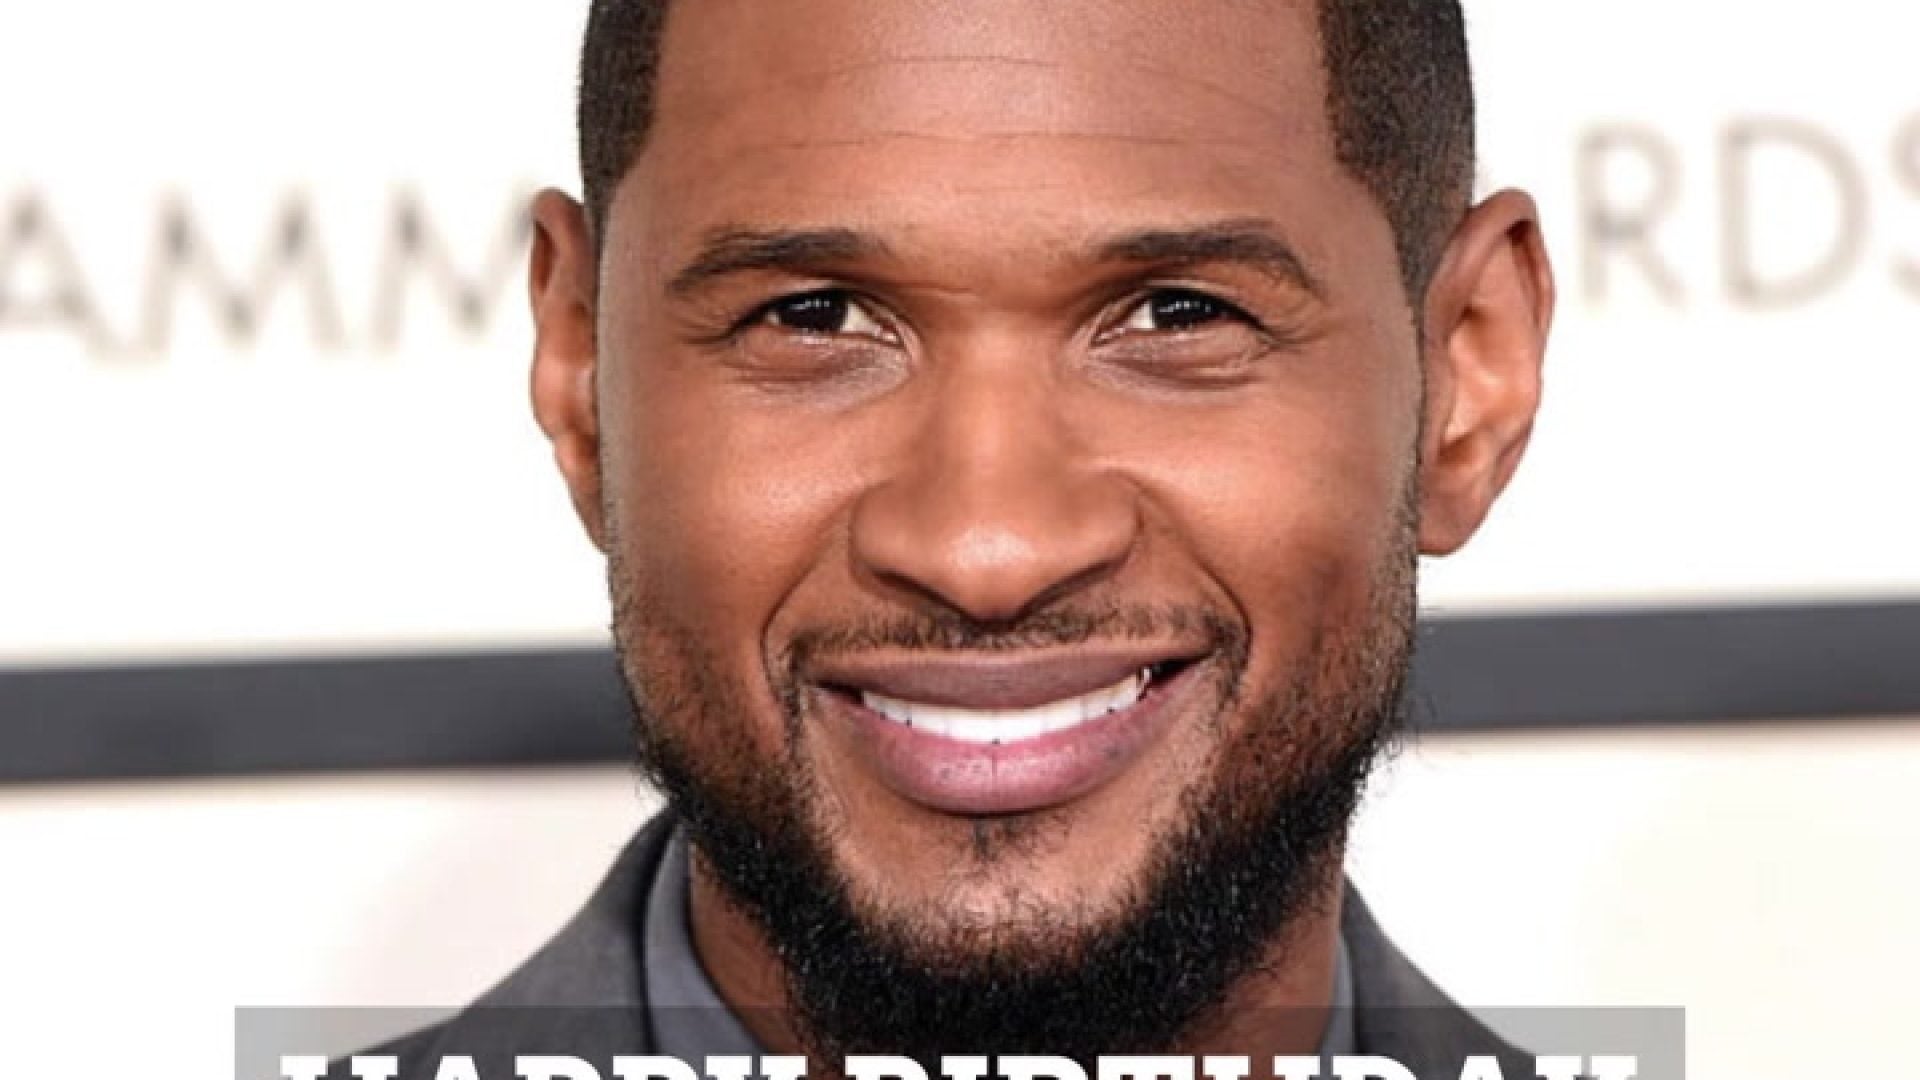 In My Feed | Happy Birthday Usher